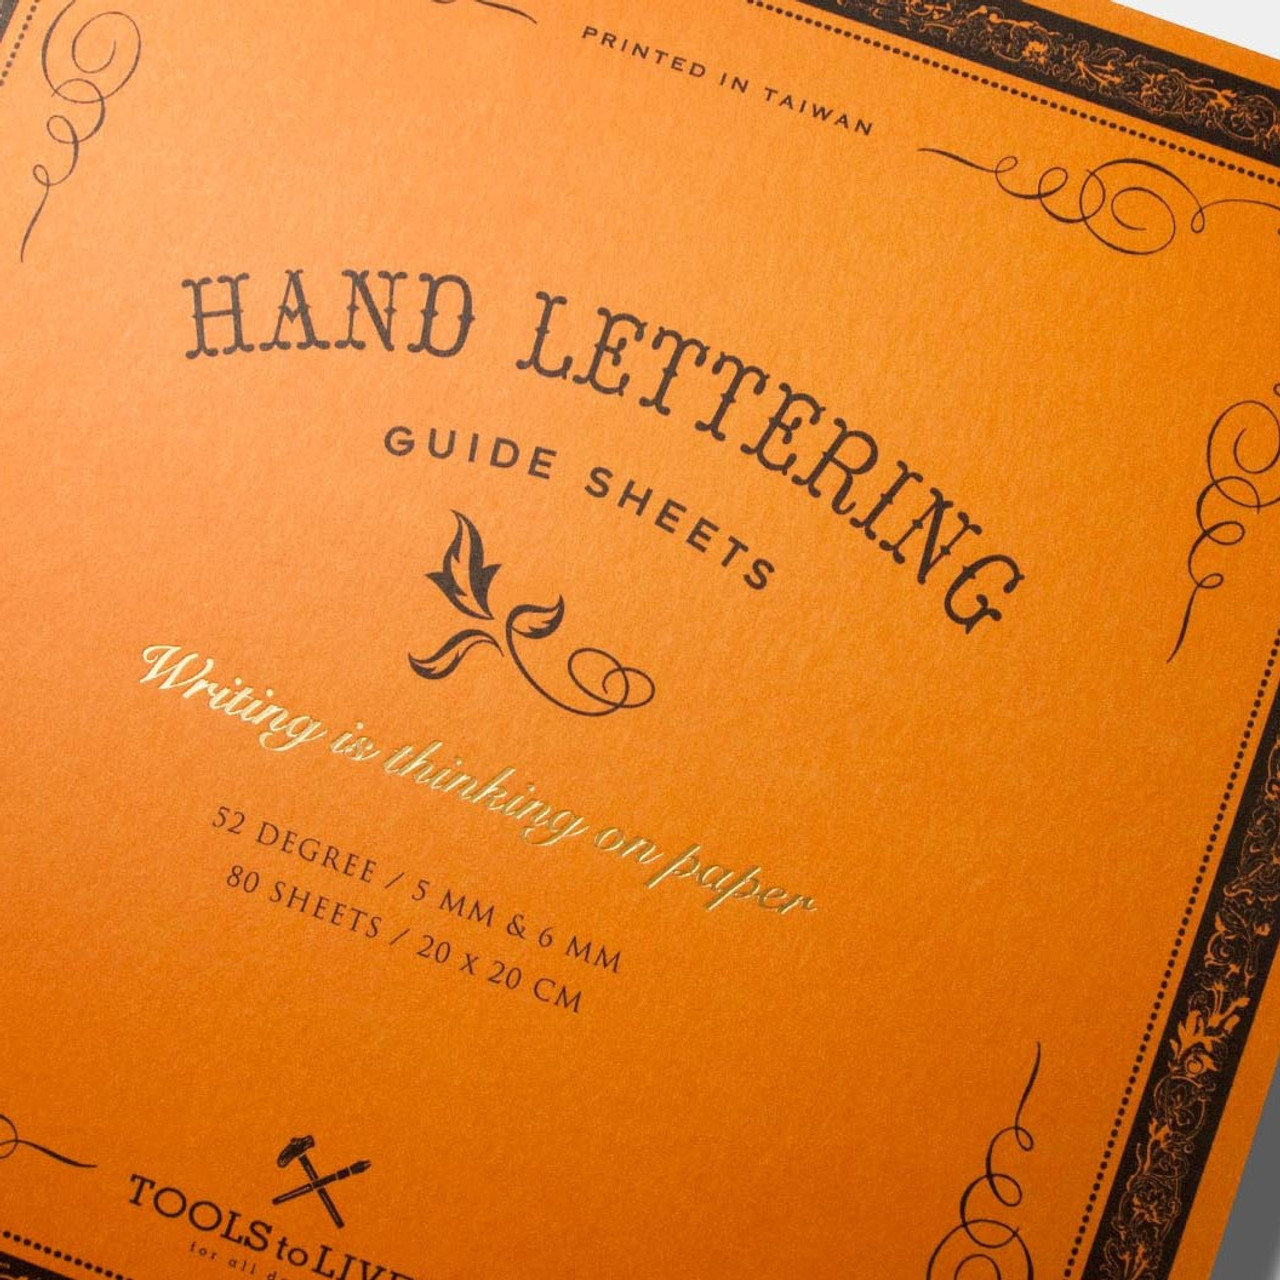 Aesthetic Handwriting Practice Notebook